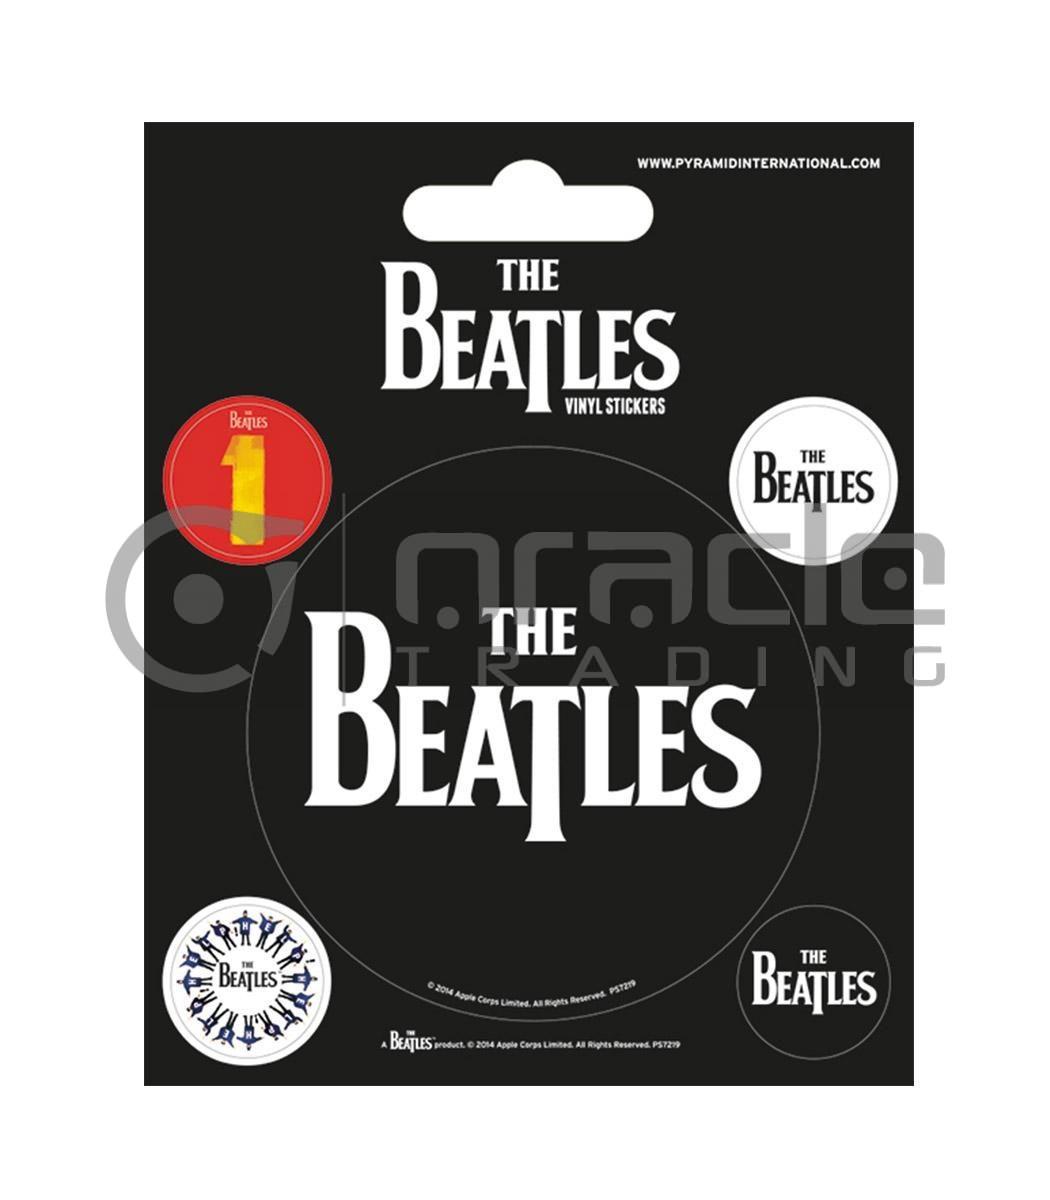 The Beatles Vinyl Sticker Pack - Classic